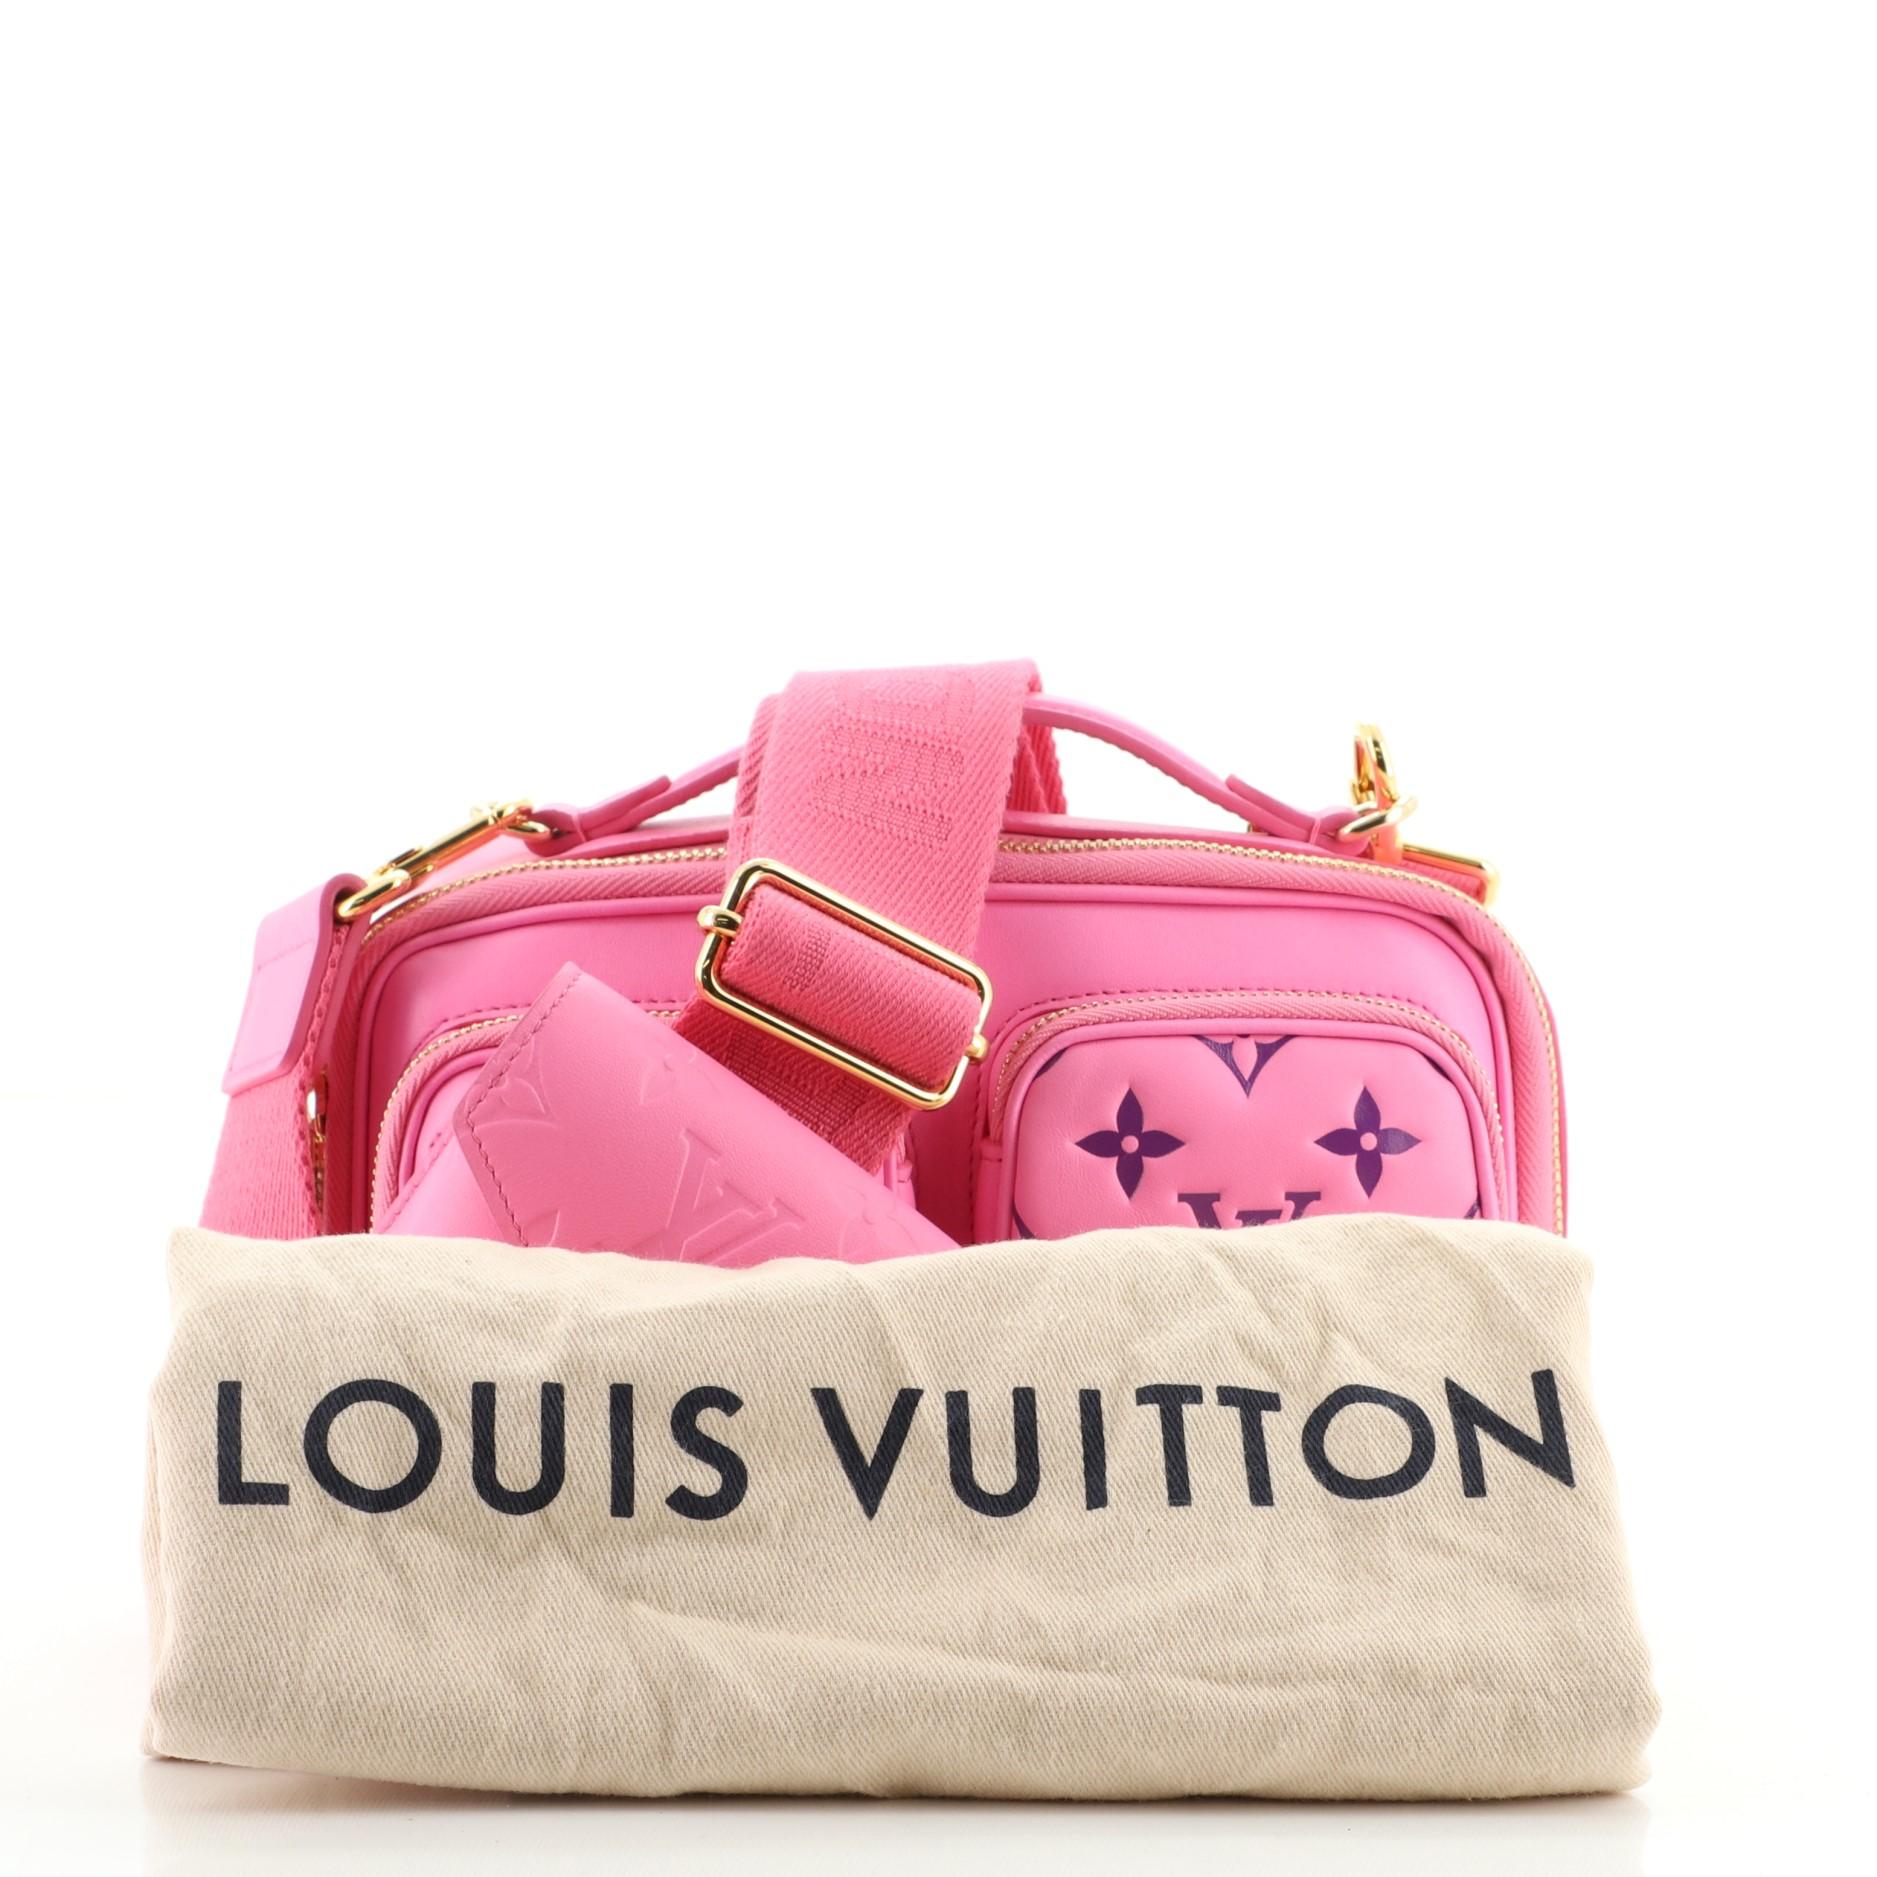 Newer-Authentic!! Louis Vuitton Crossbody Purse for Sale in Villa Ridge, MO  - OfferUp